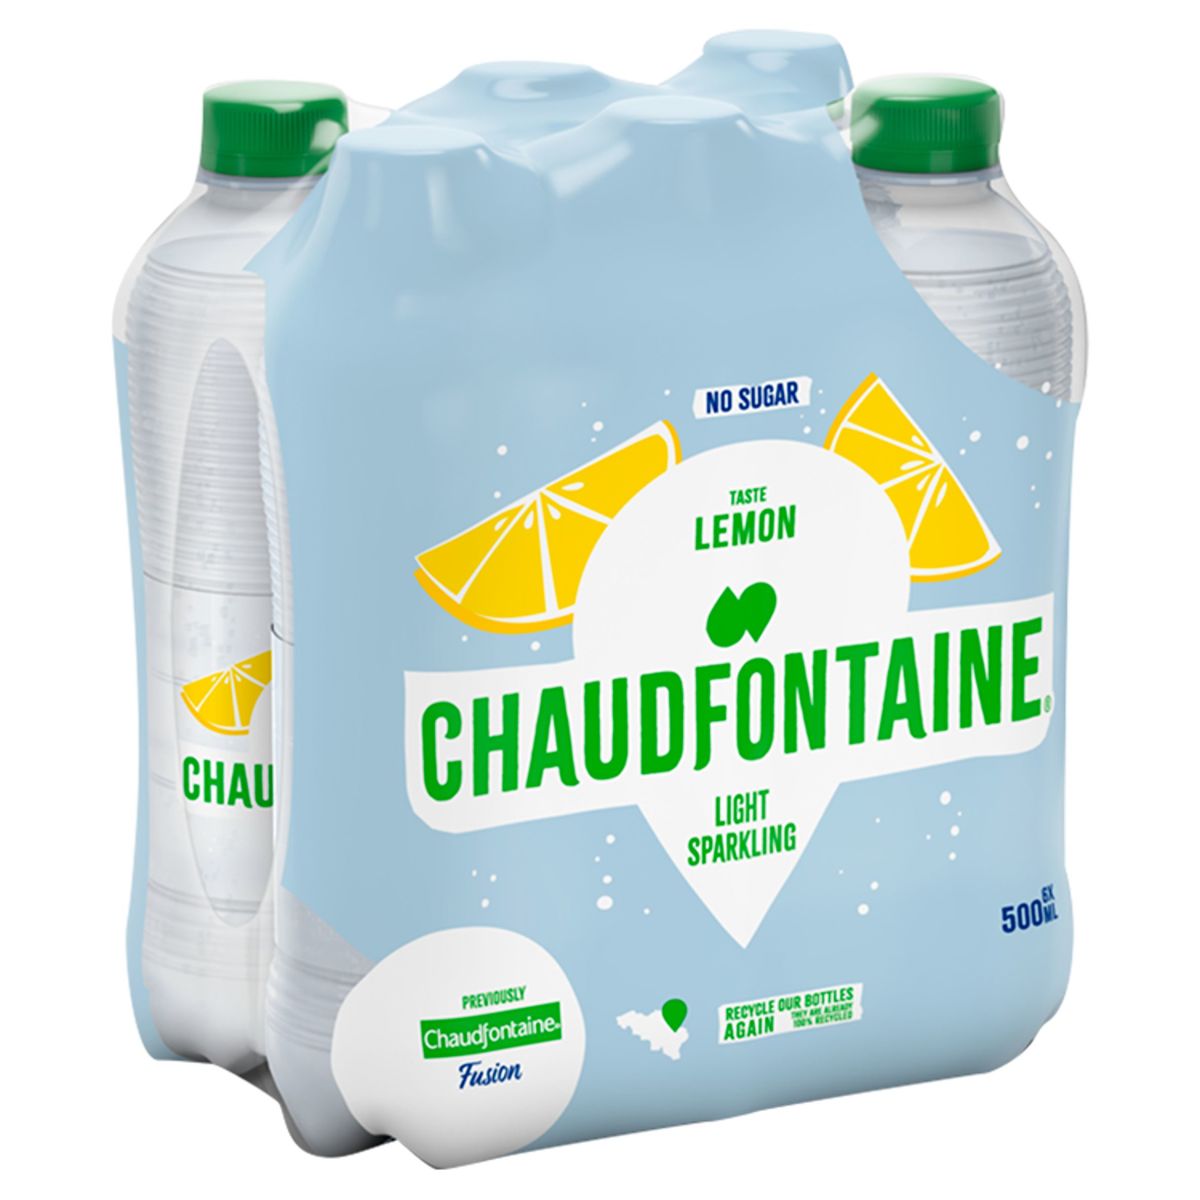 Chaudfontaine Lemon Sparkling No Sugar Pet 500 ml X 6